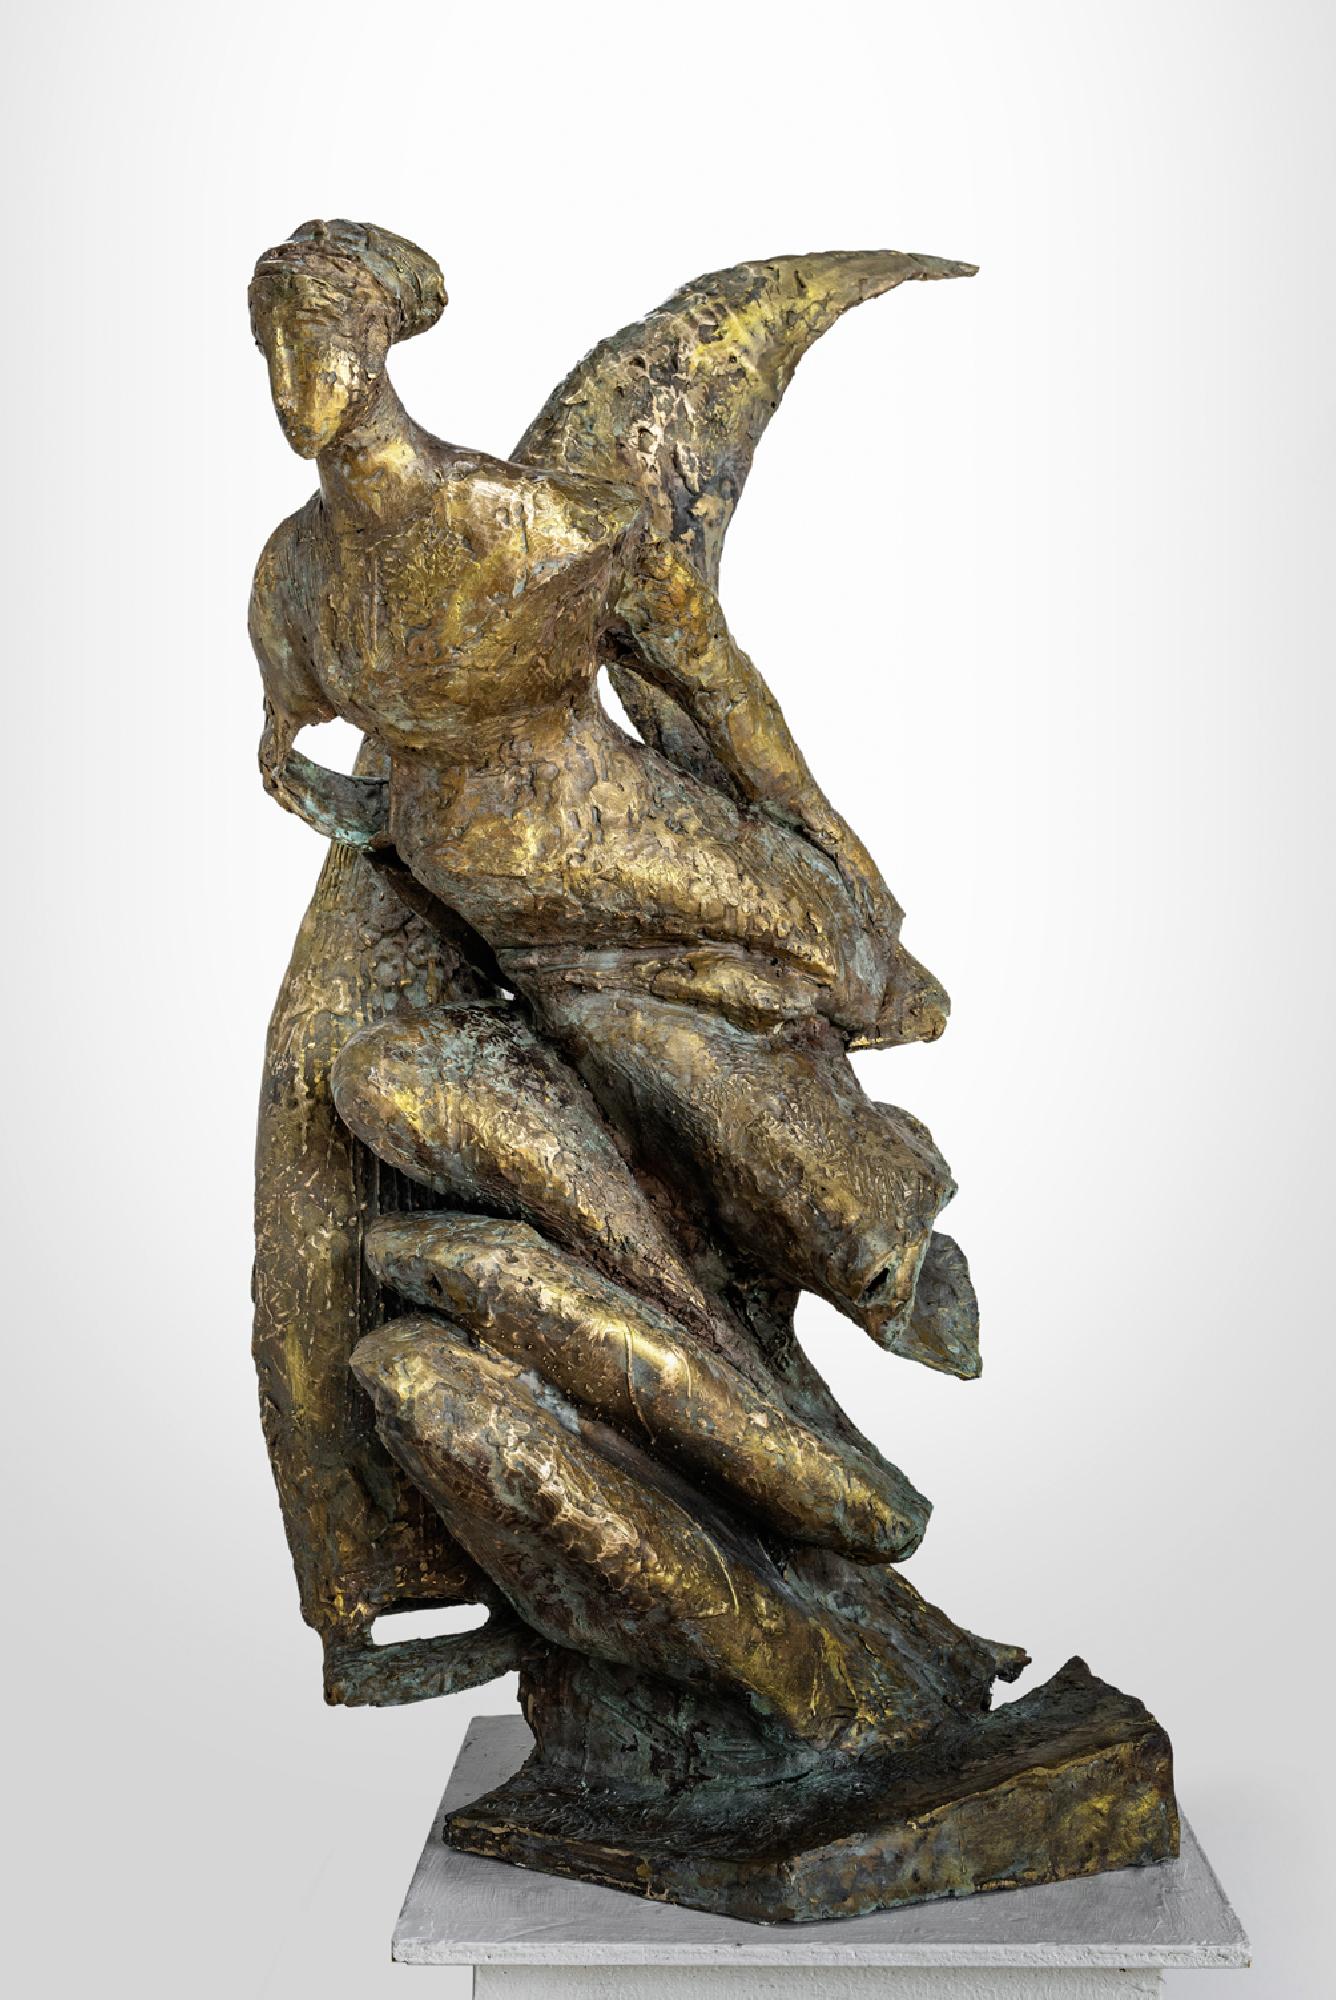 Leonard Lorenz: Ausrichtung
2018
34 × 69 cm
bronze